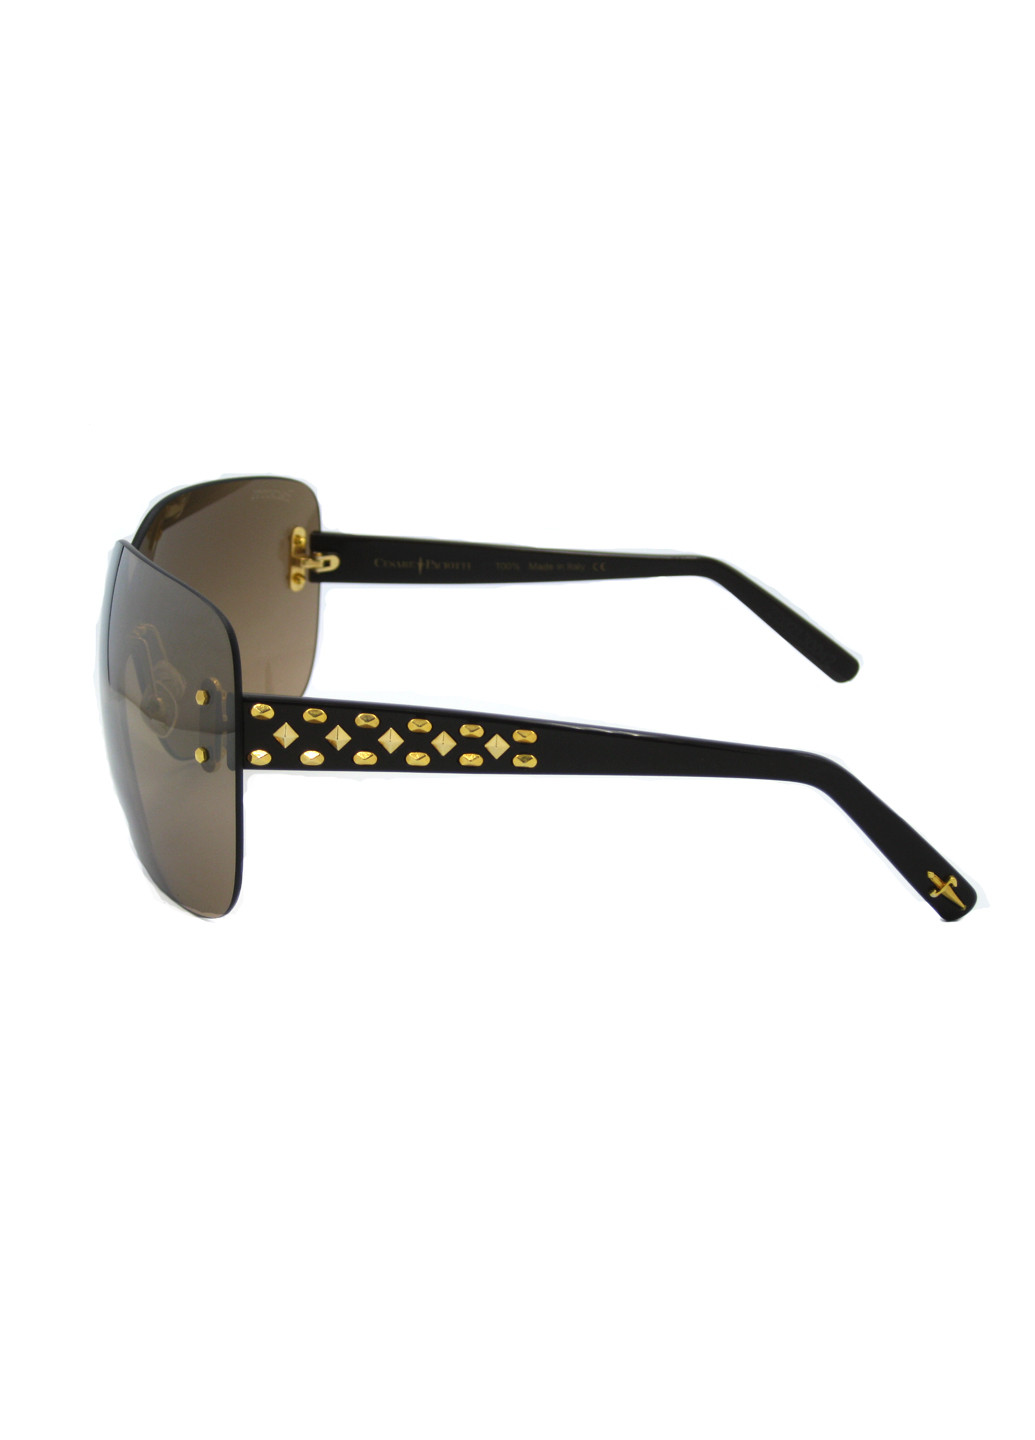 Cолнцезащитные очки Paciotti p022 (209194084)